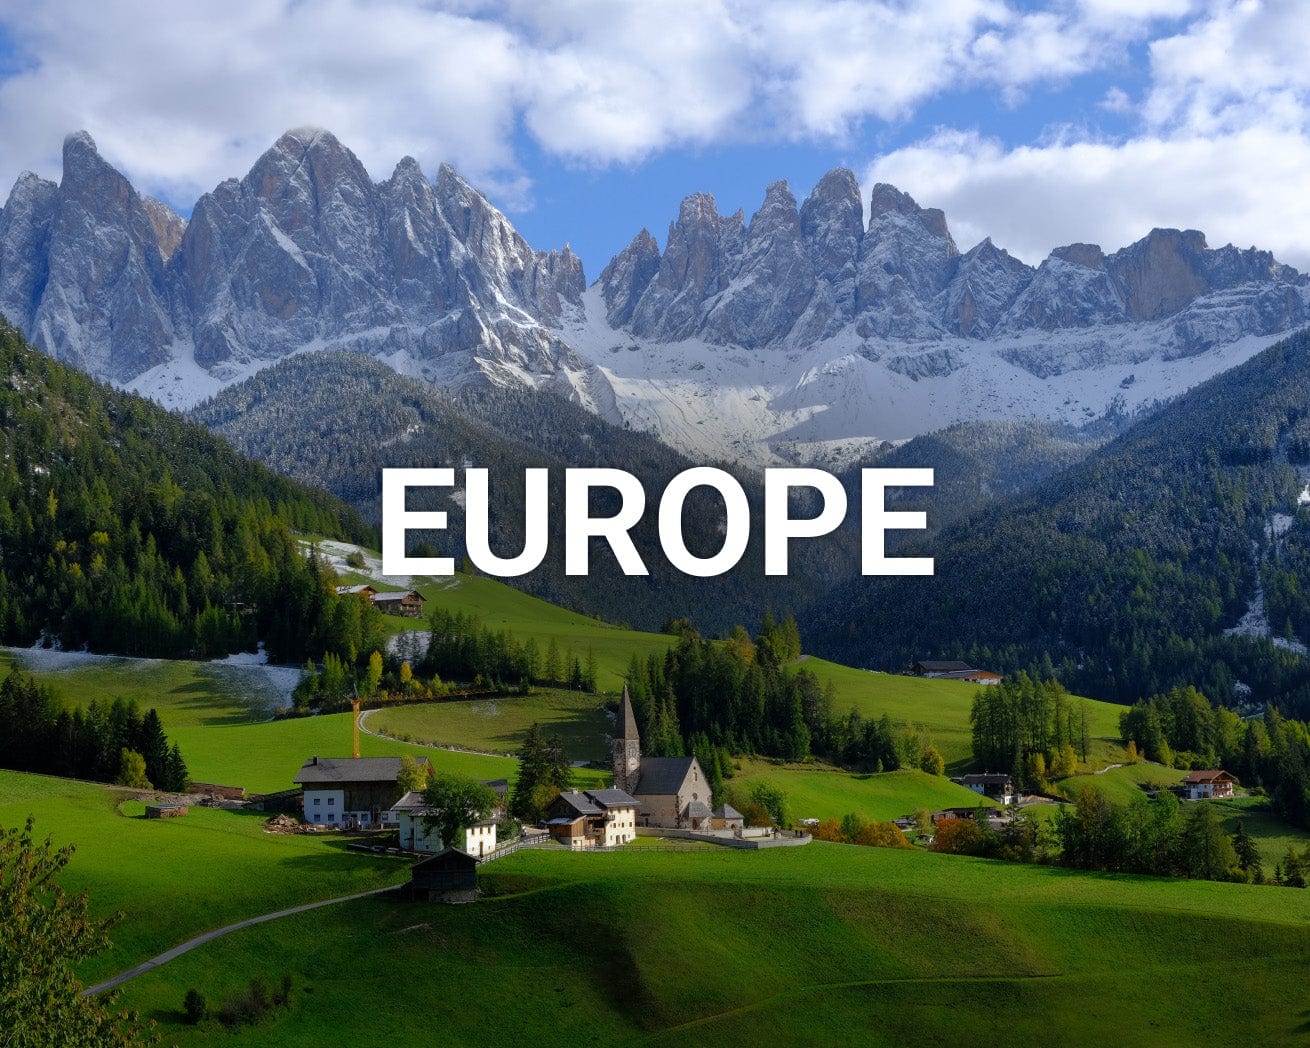 Europe main image